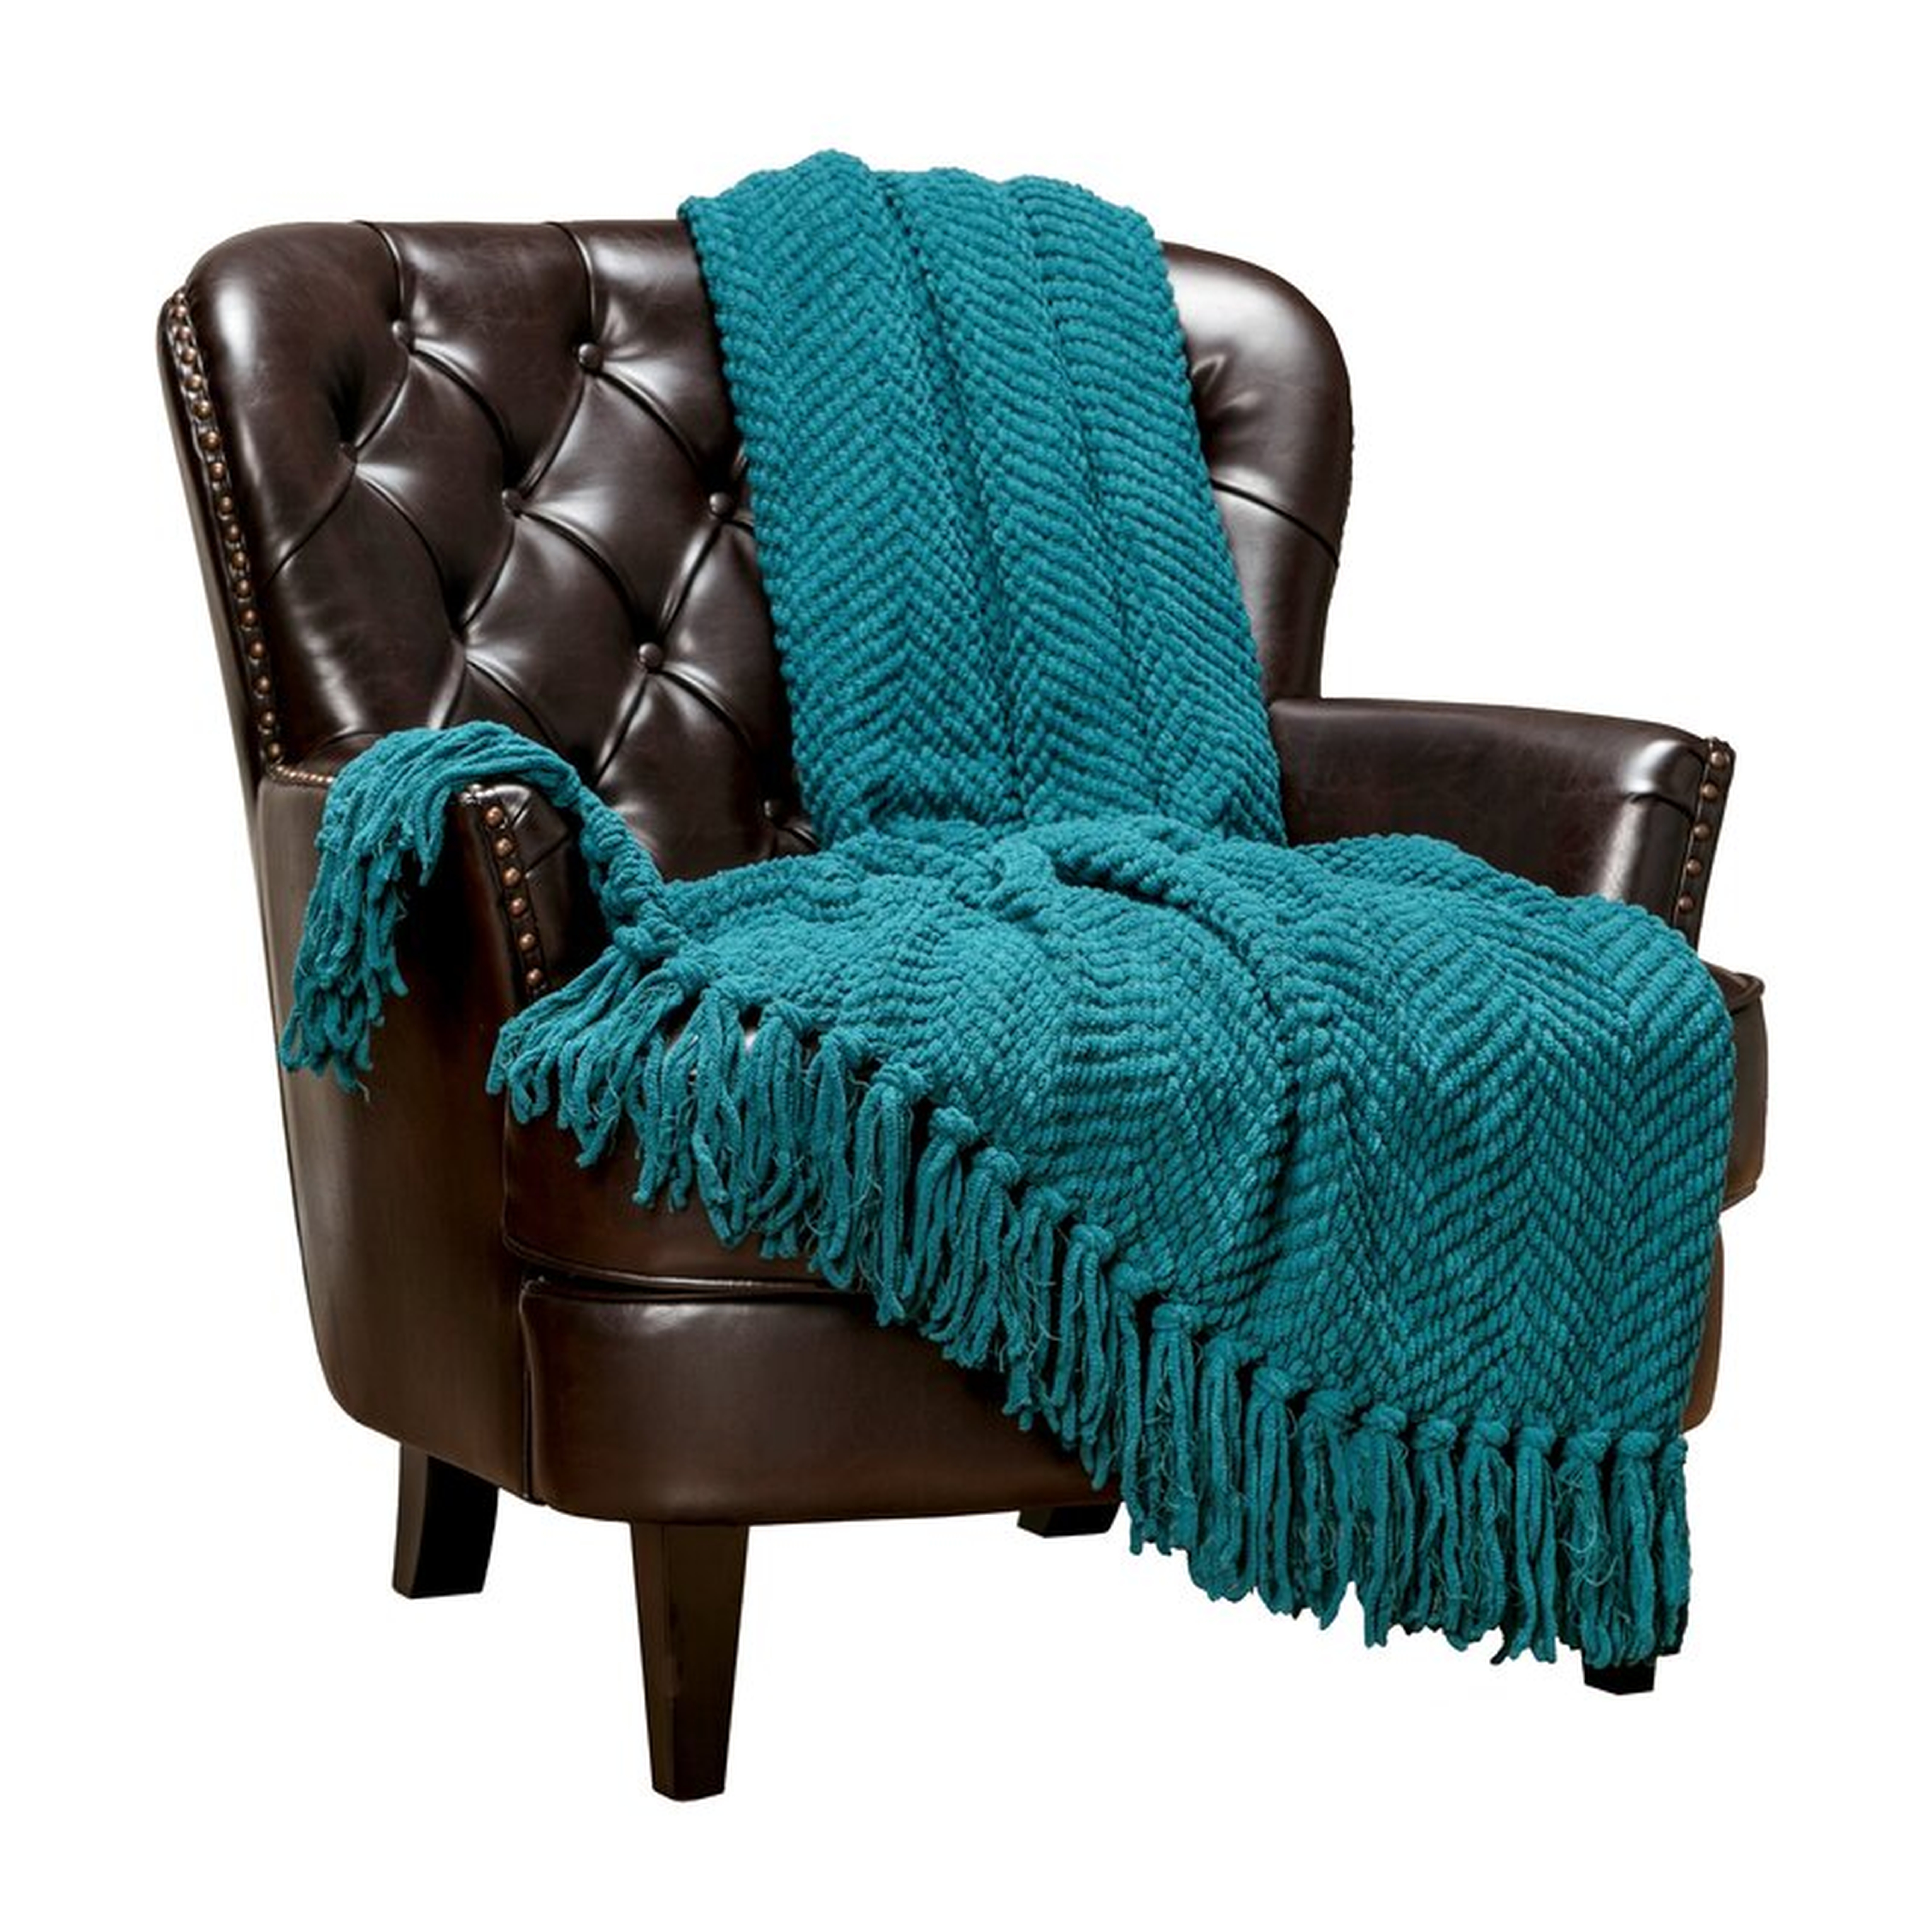 Goufes Textured Knitted Super Soft Blanket - Teal - Wayfair